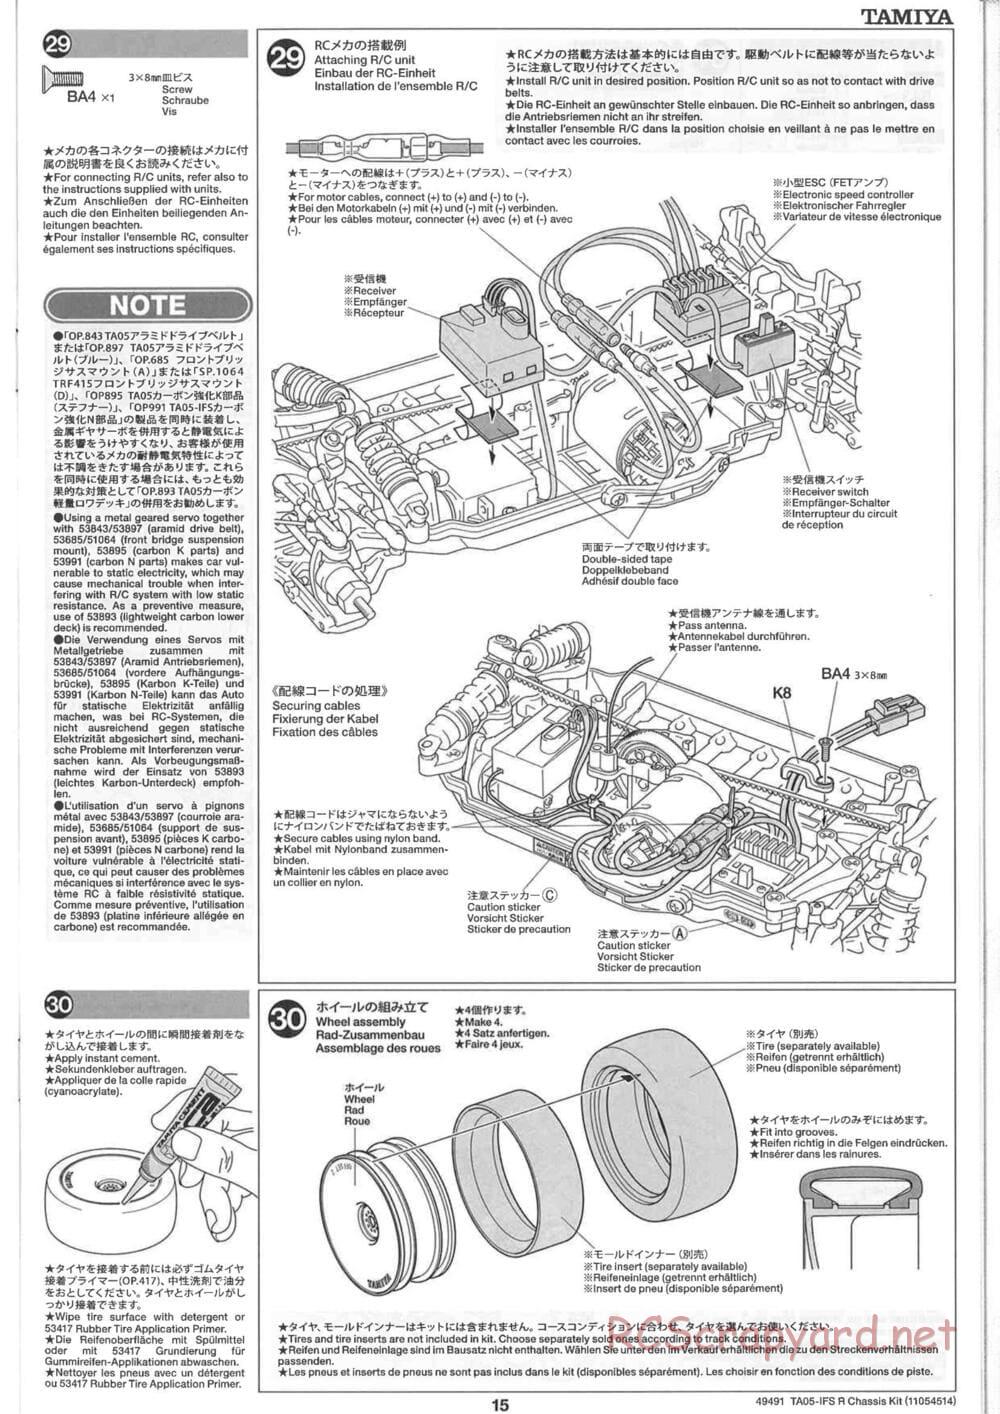 Tamiya - TA05-IFS R Chassis - Manual - Page 15